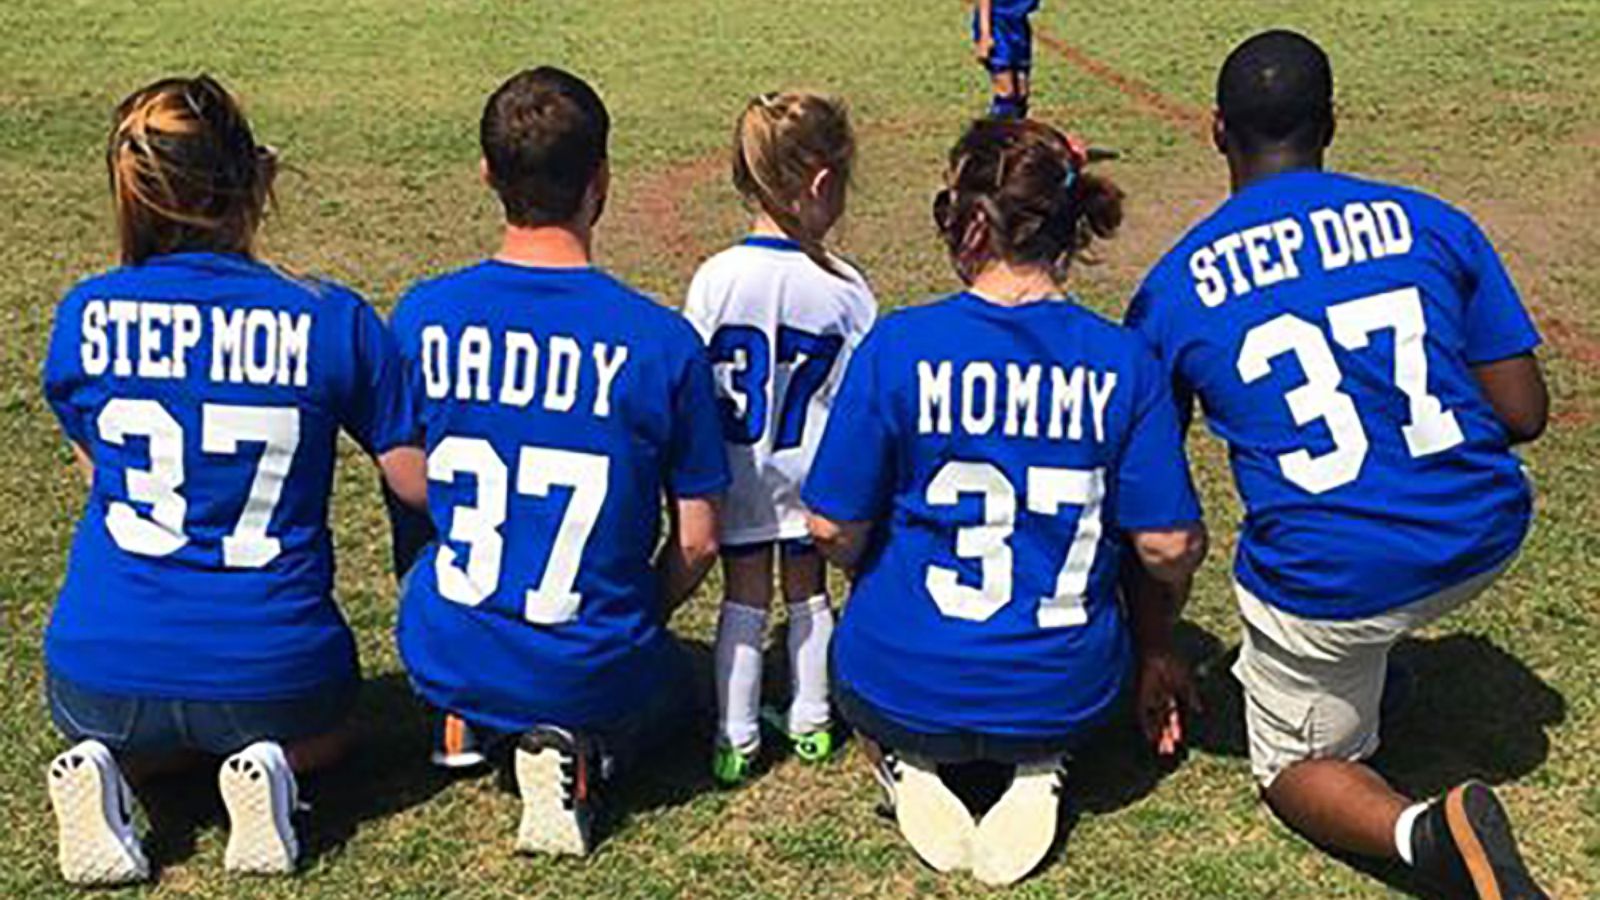 Family's custom soccer jerseys show off 